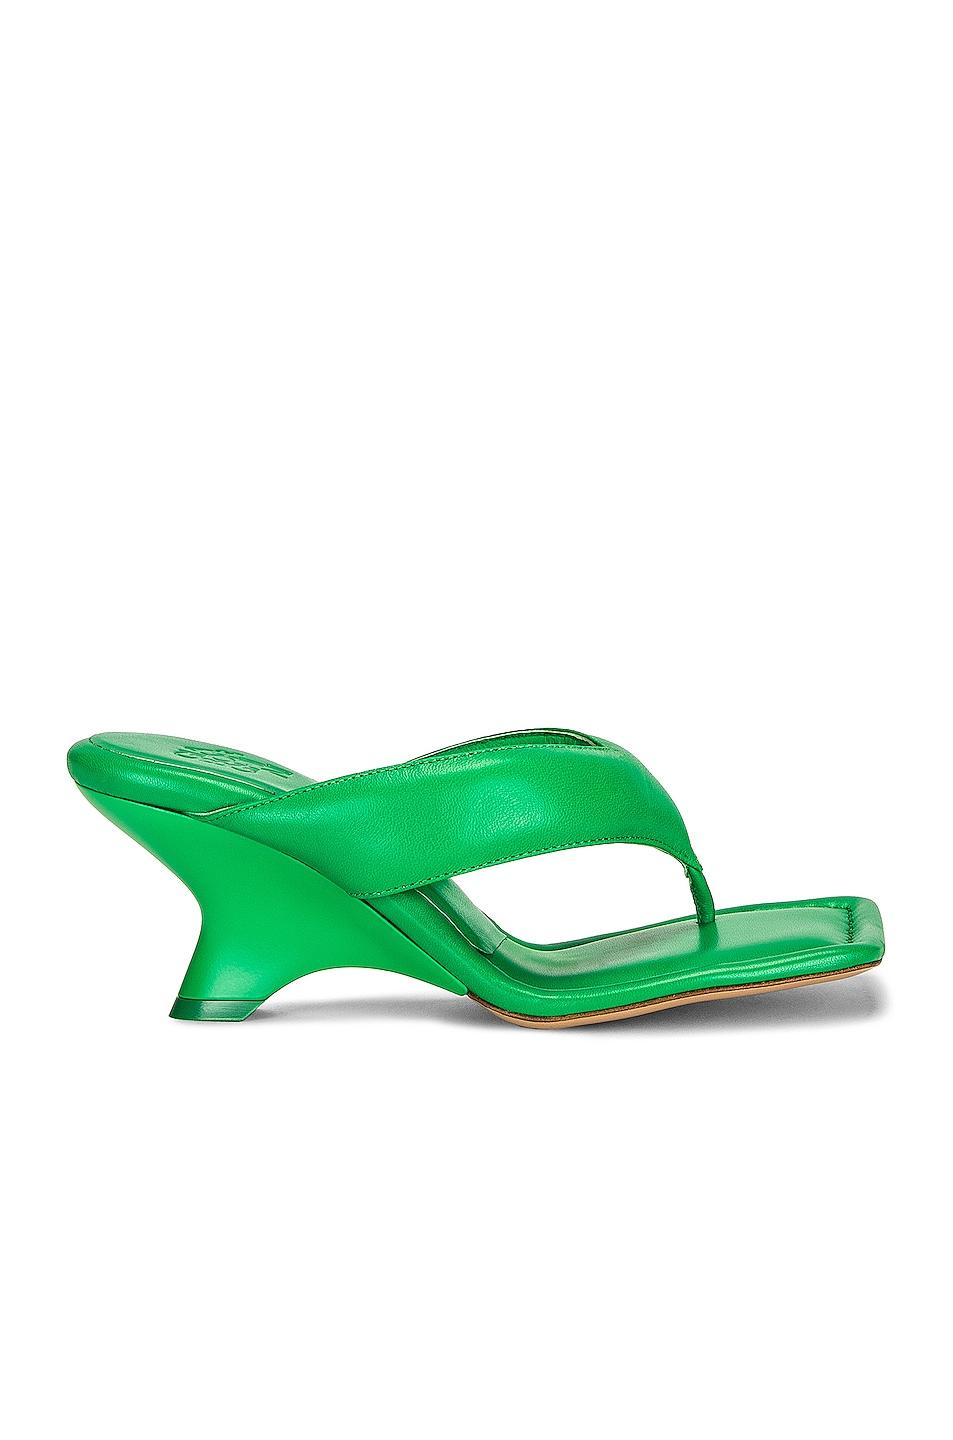 Gia Borghini For Fwrd Leather Thong Wedge Sandal in Green | Lyst